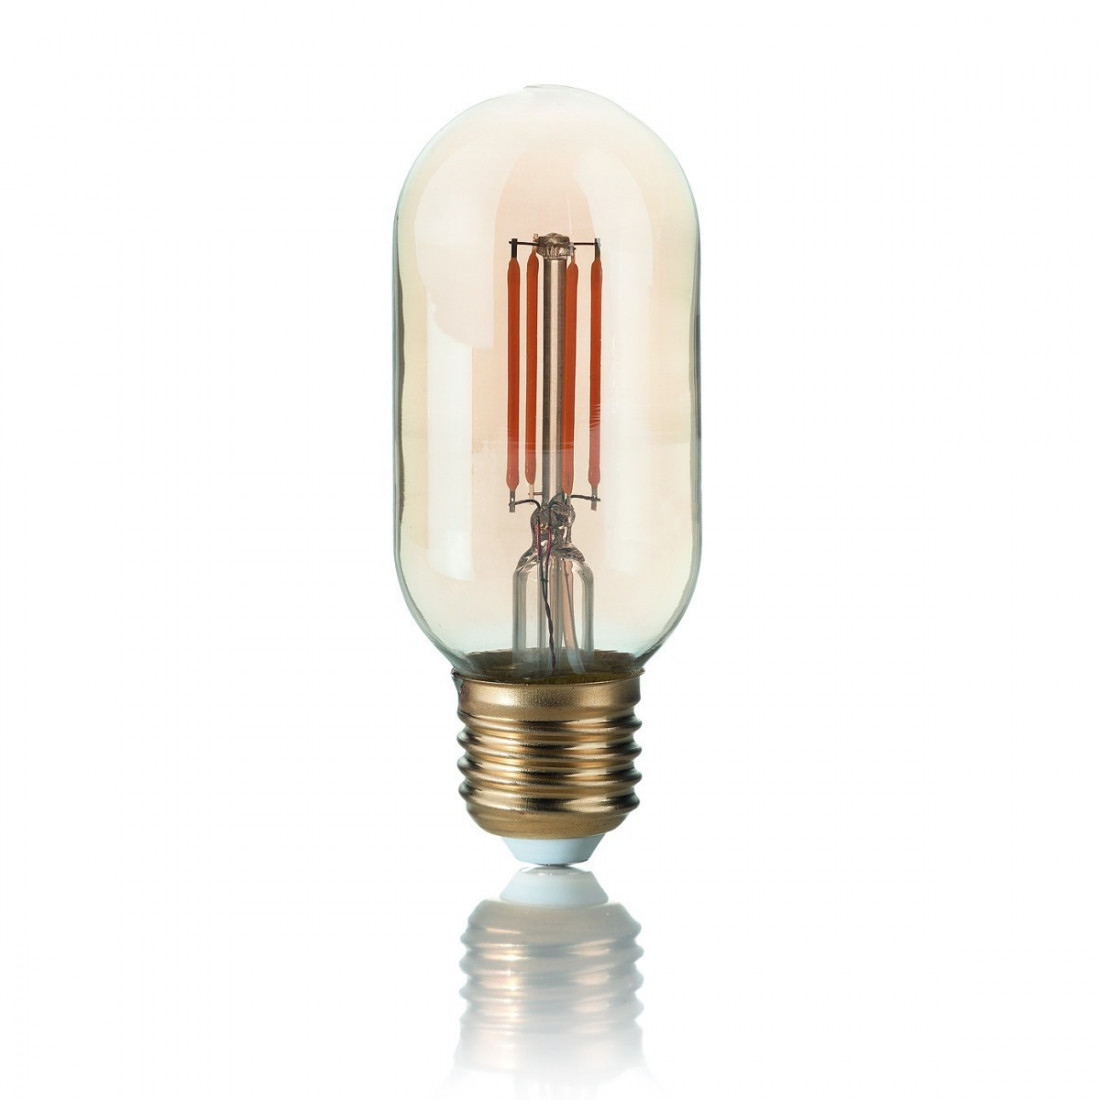 Lampadina ID-VINTAGE E27 4W LED 300LM vetro ambra bombato retrò luce caldissima interno